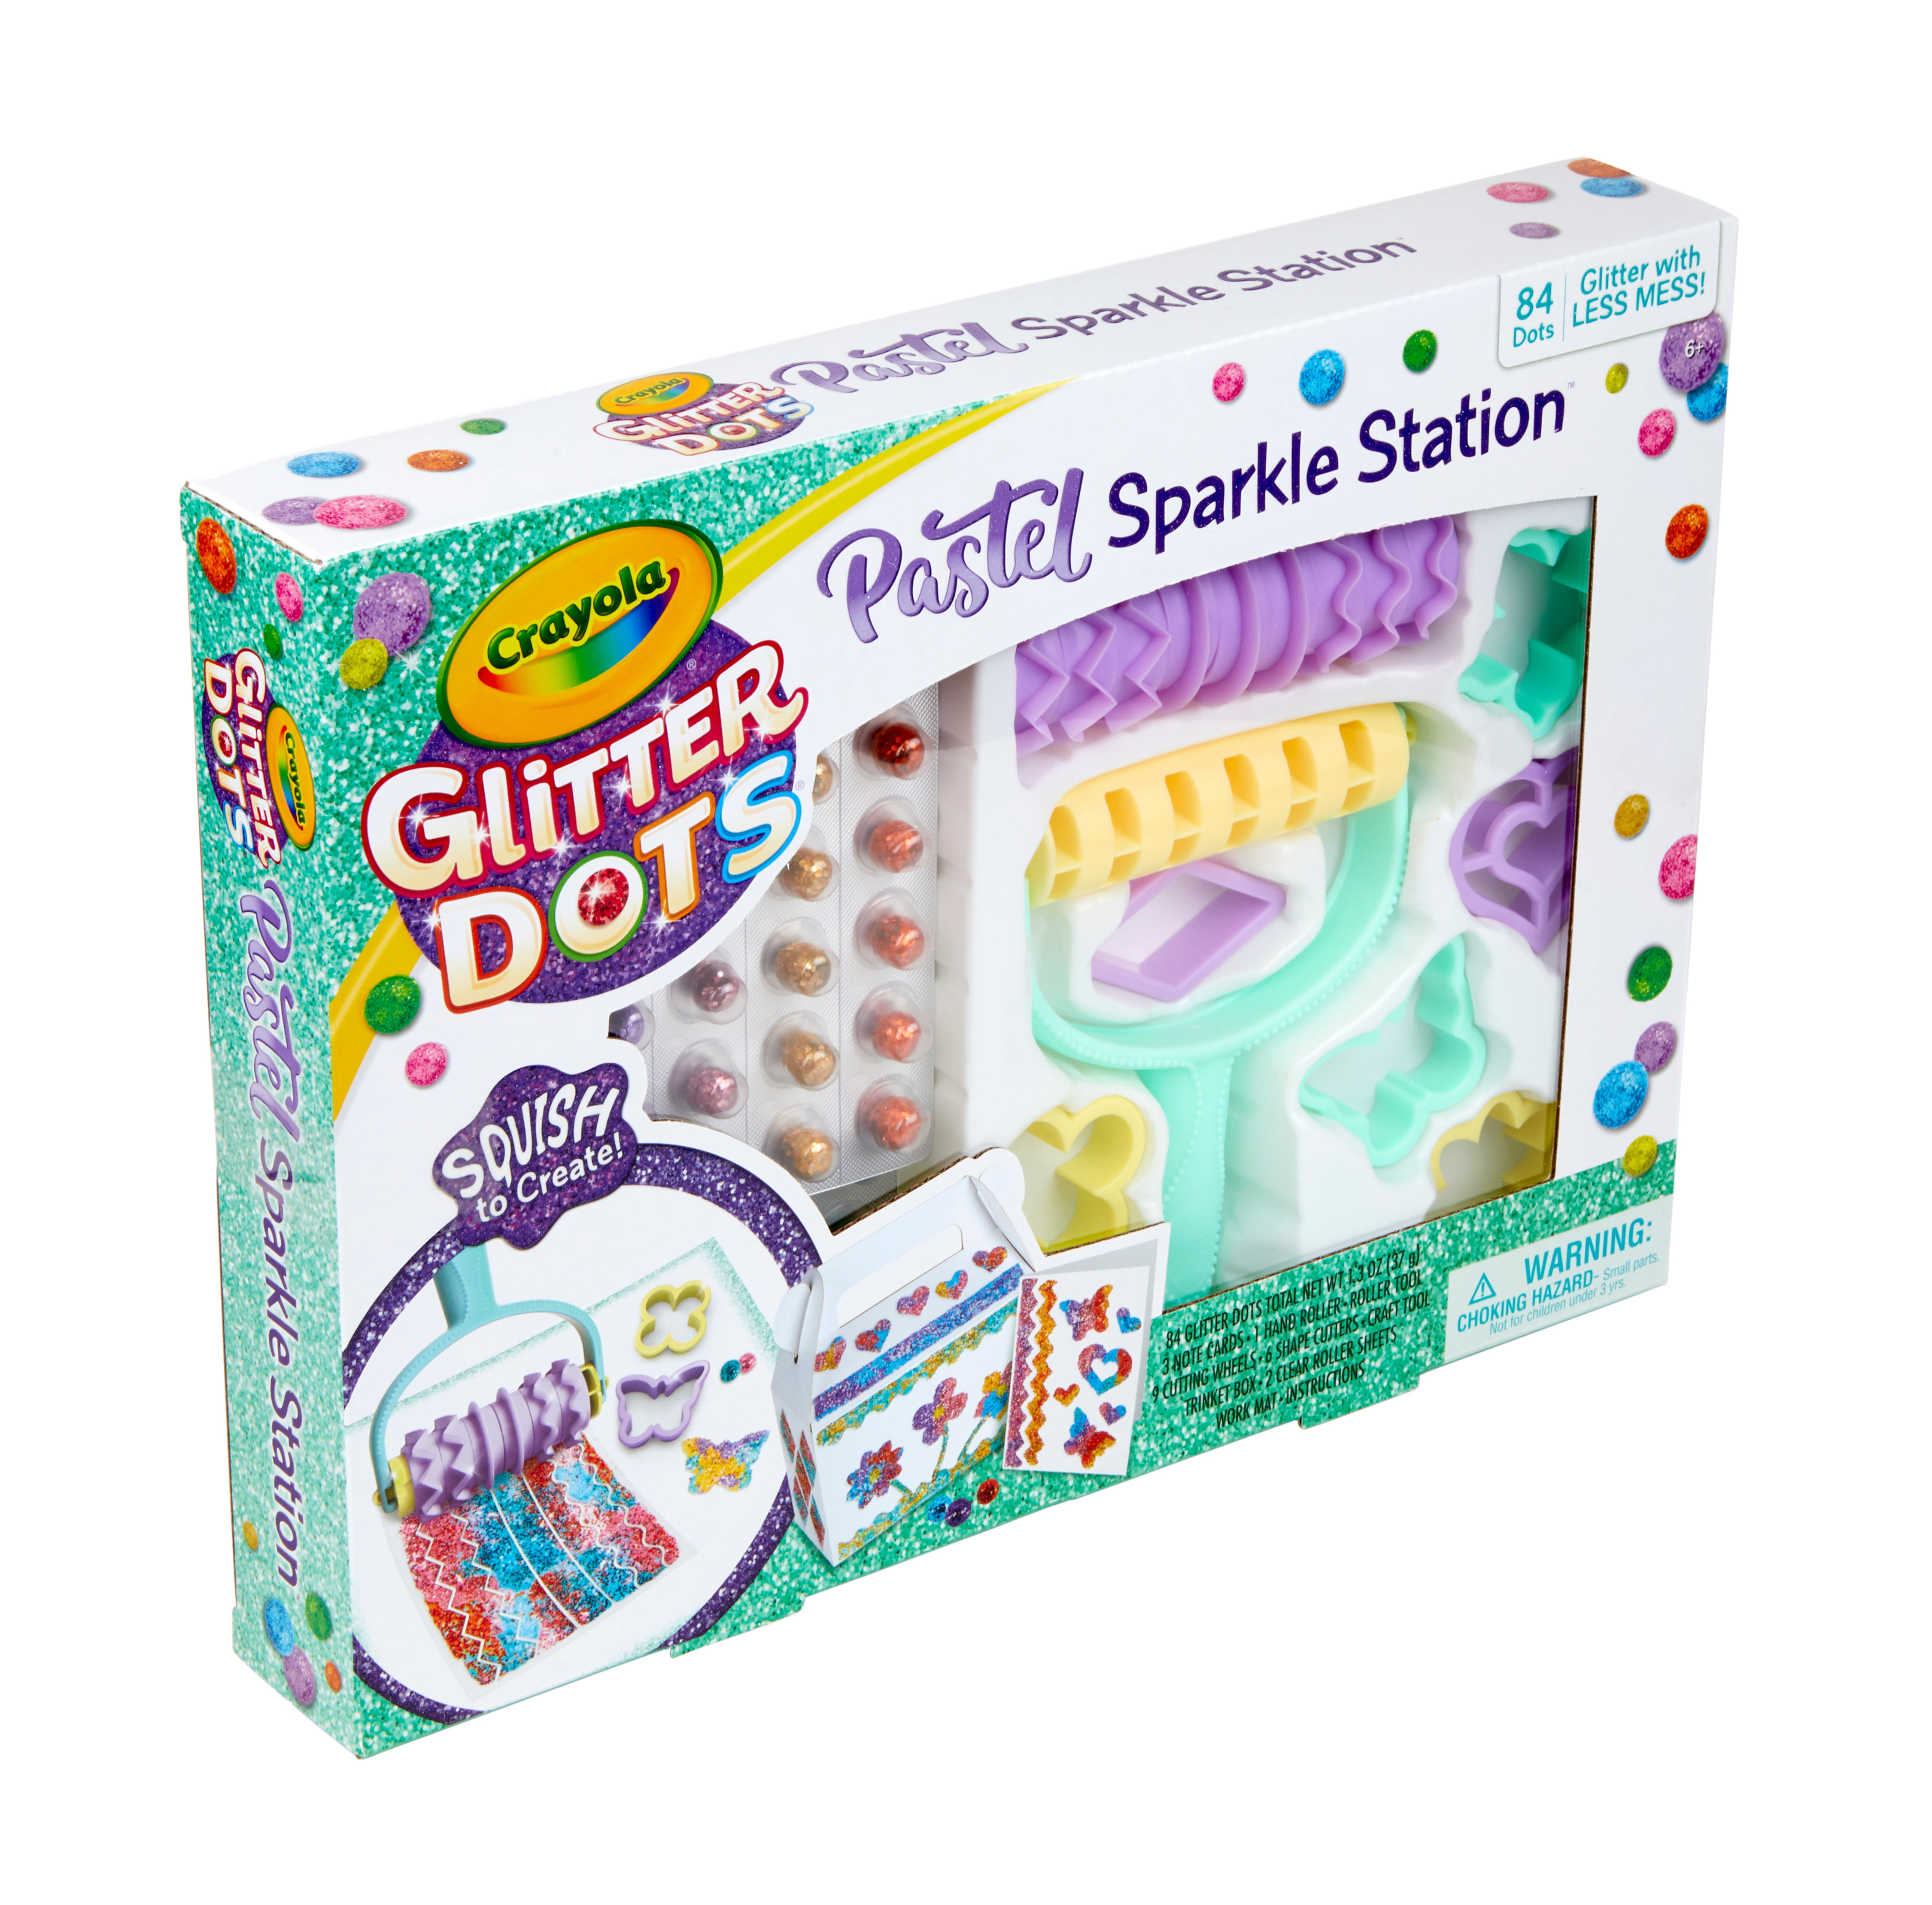 Crayola Glitter Dots Sparkle Station 100 Pieces Craft Set, Child